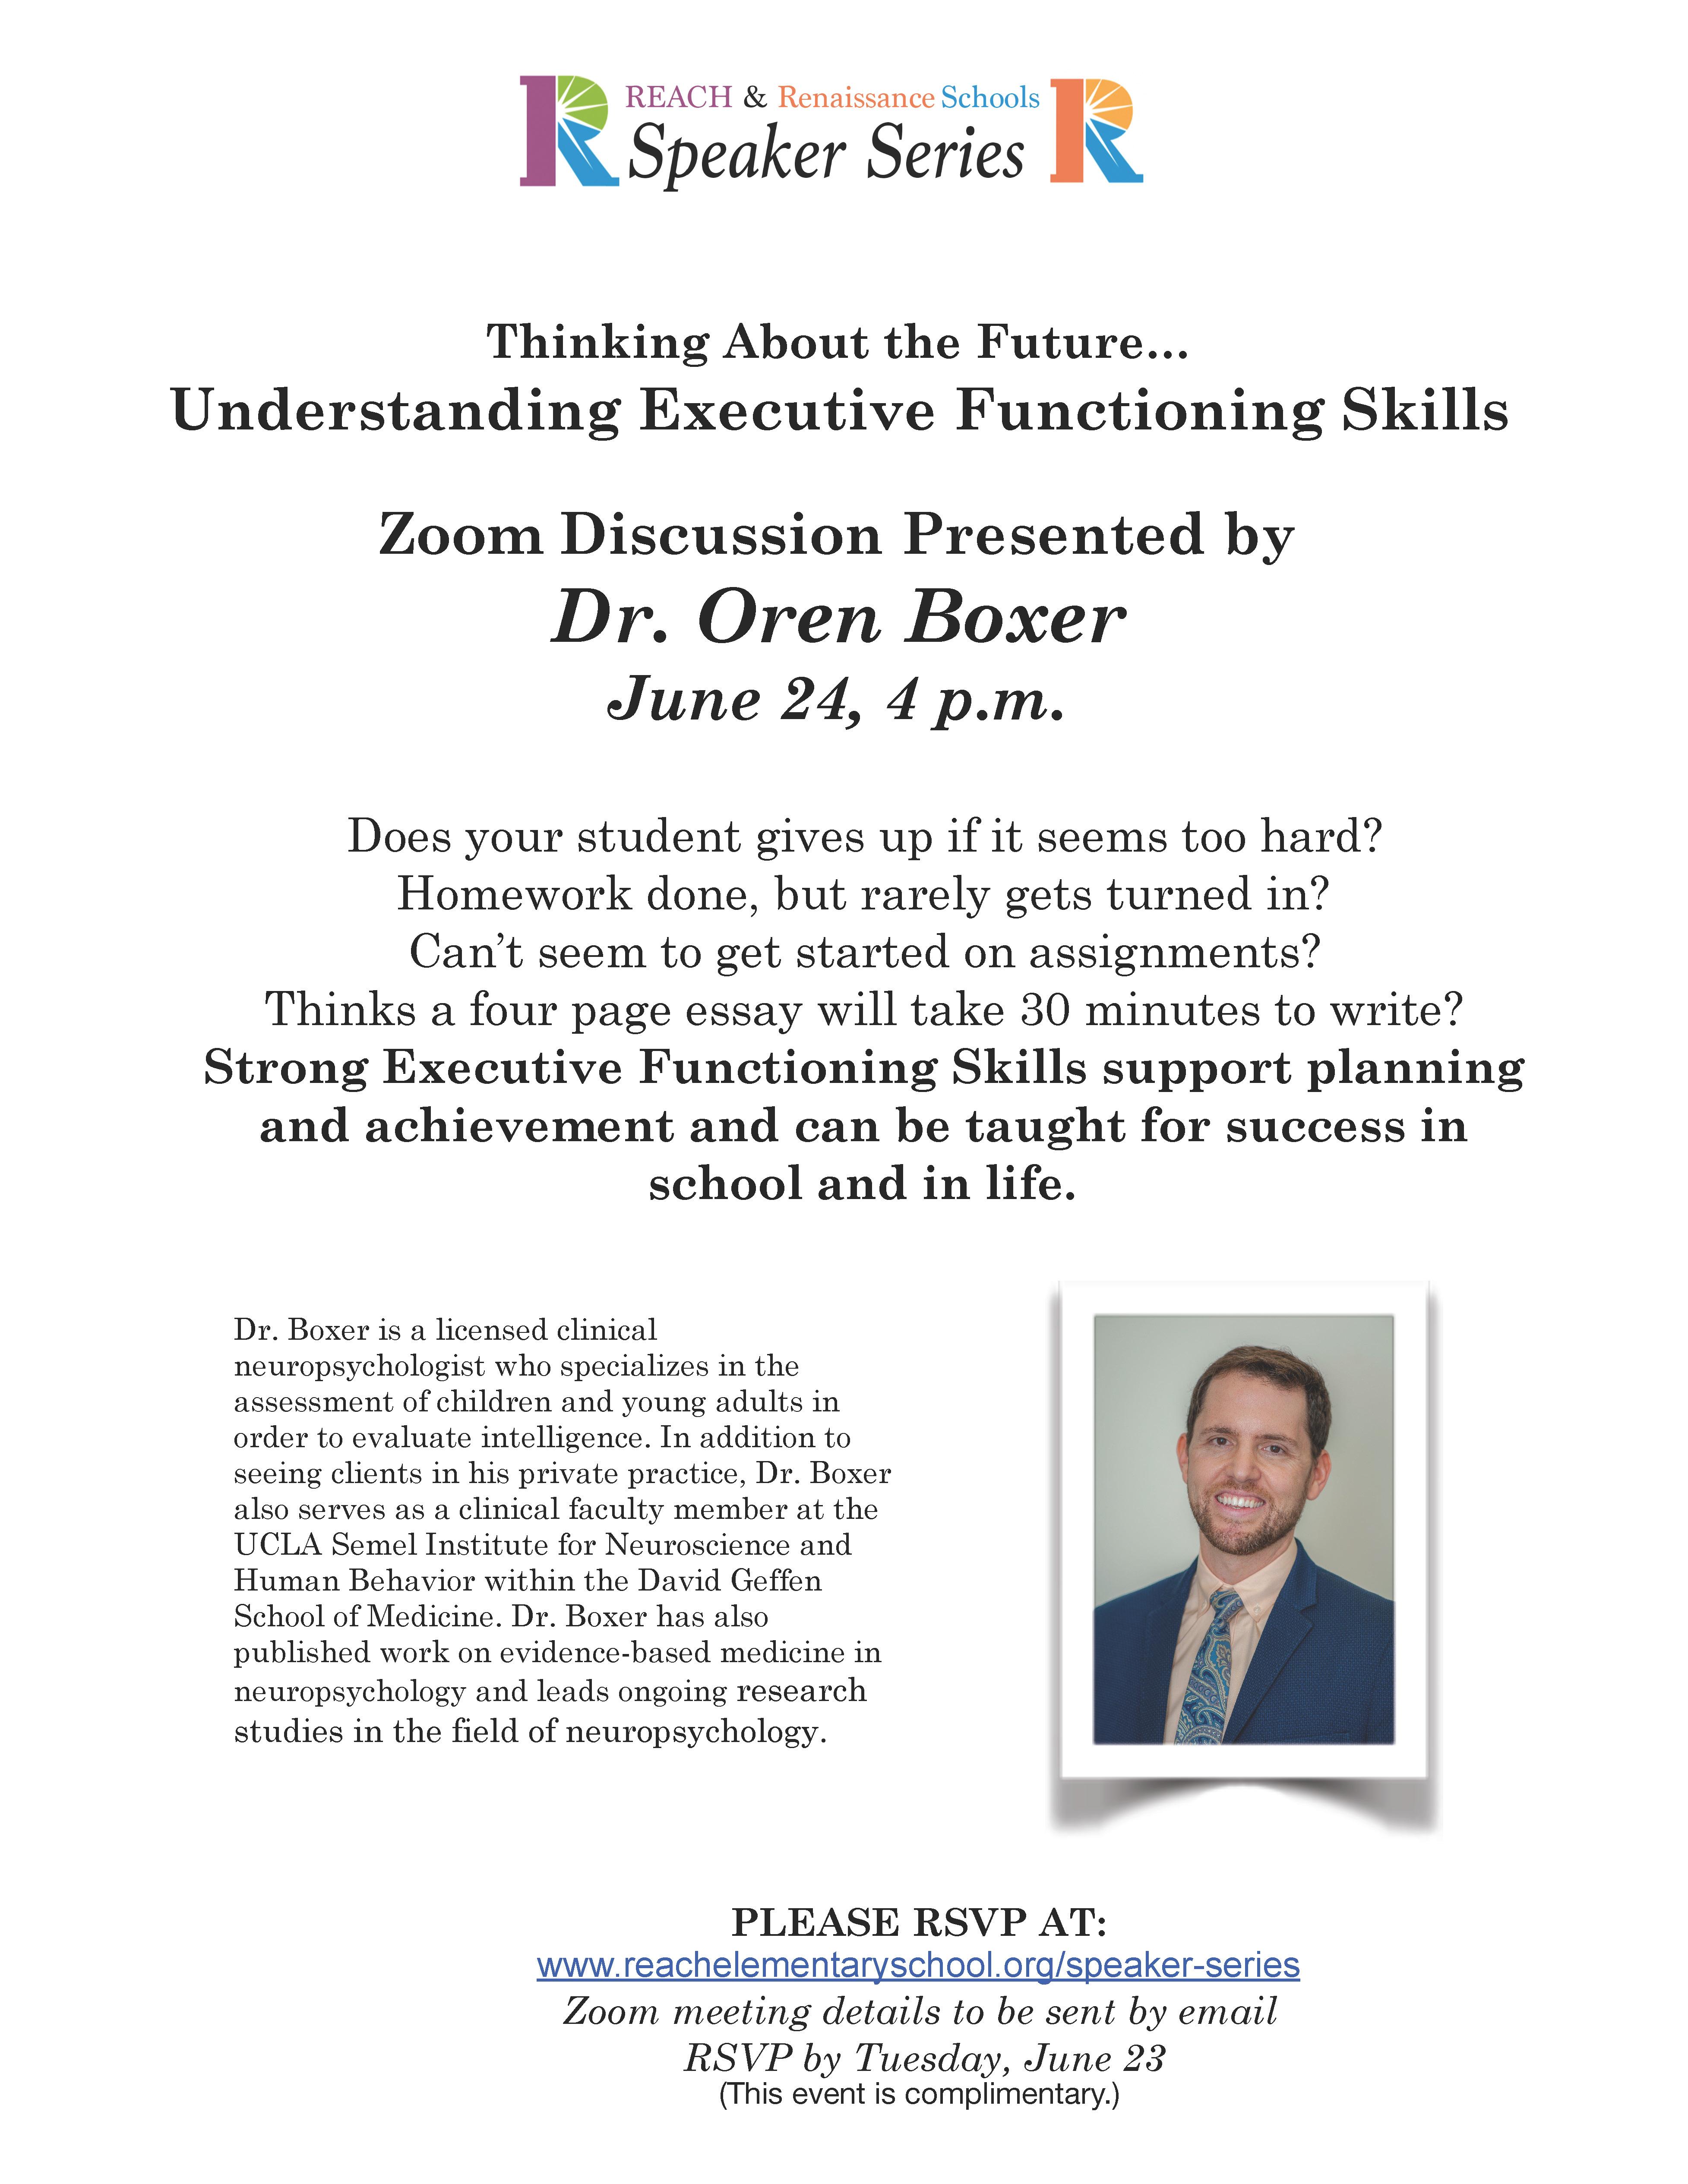 Dr. Oren Boxer Speaker Series Flyer - Understanding Executive Functioning Skills - June 24 - 4 PM